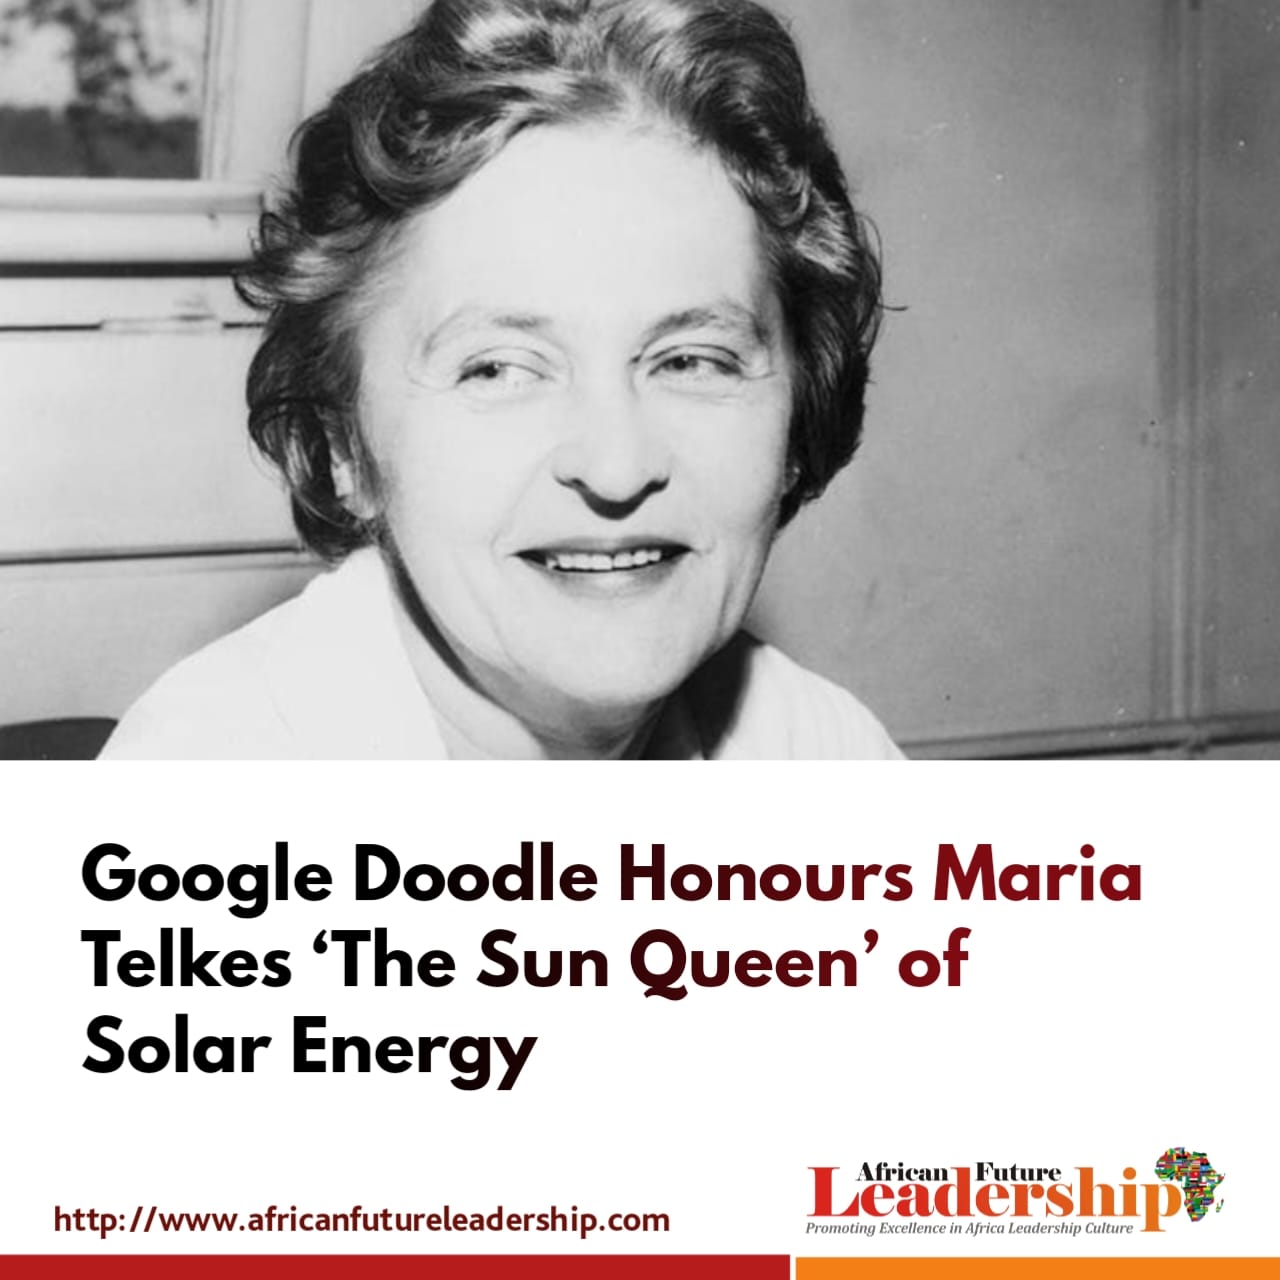 Google Doodle Honours Maria Telkes ‘The Sun Queen’ of Solar Energy